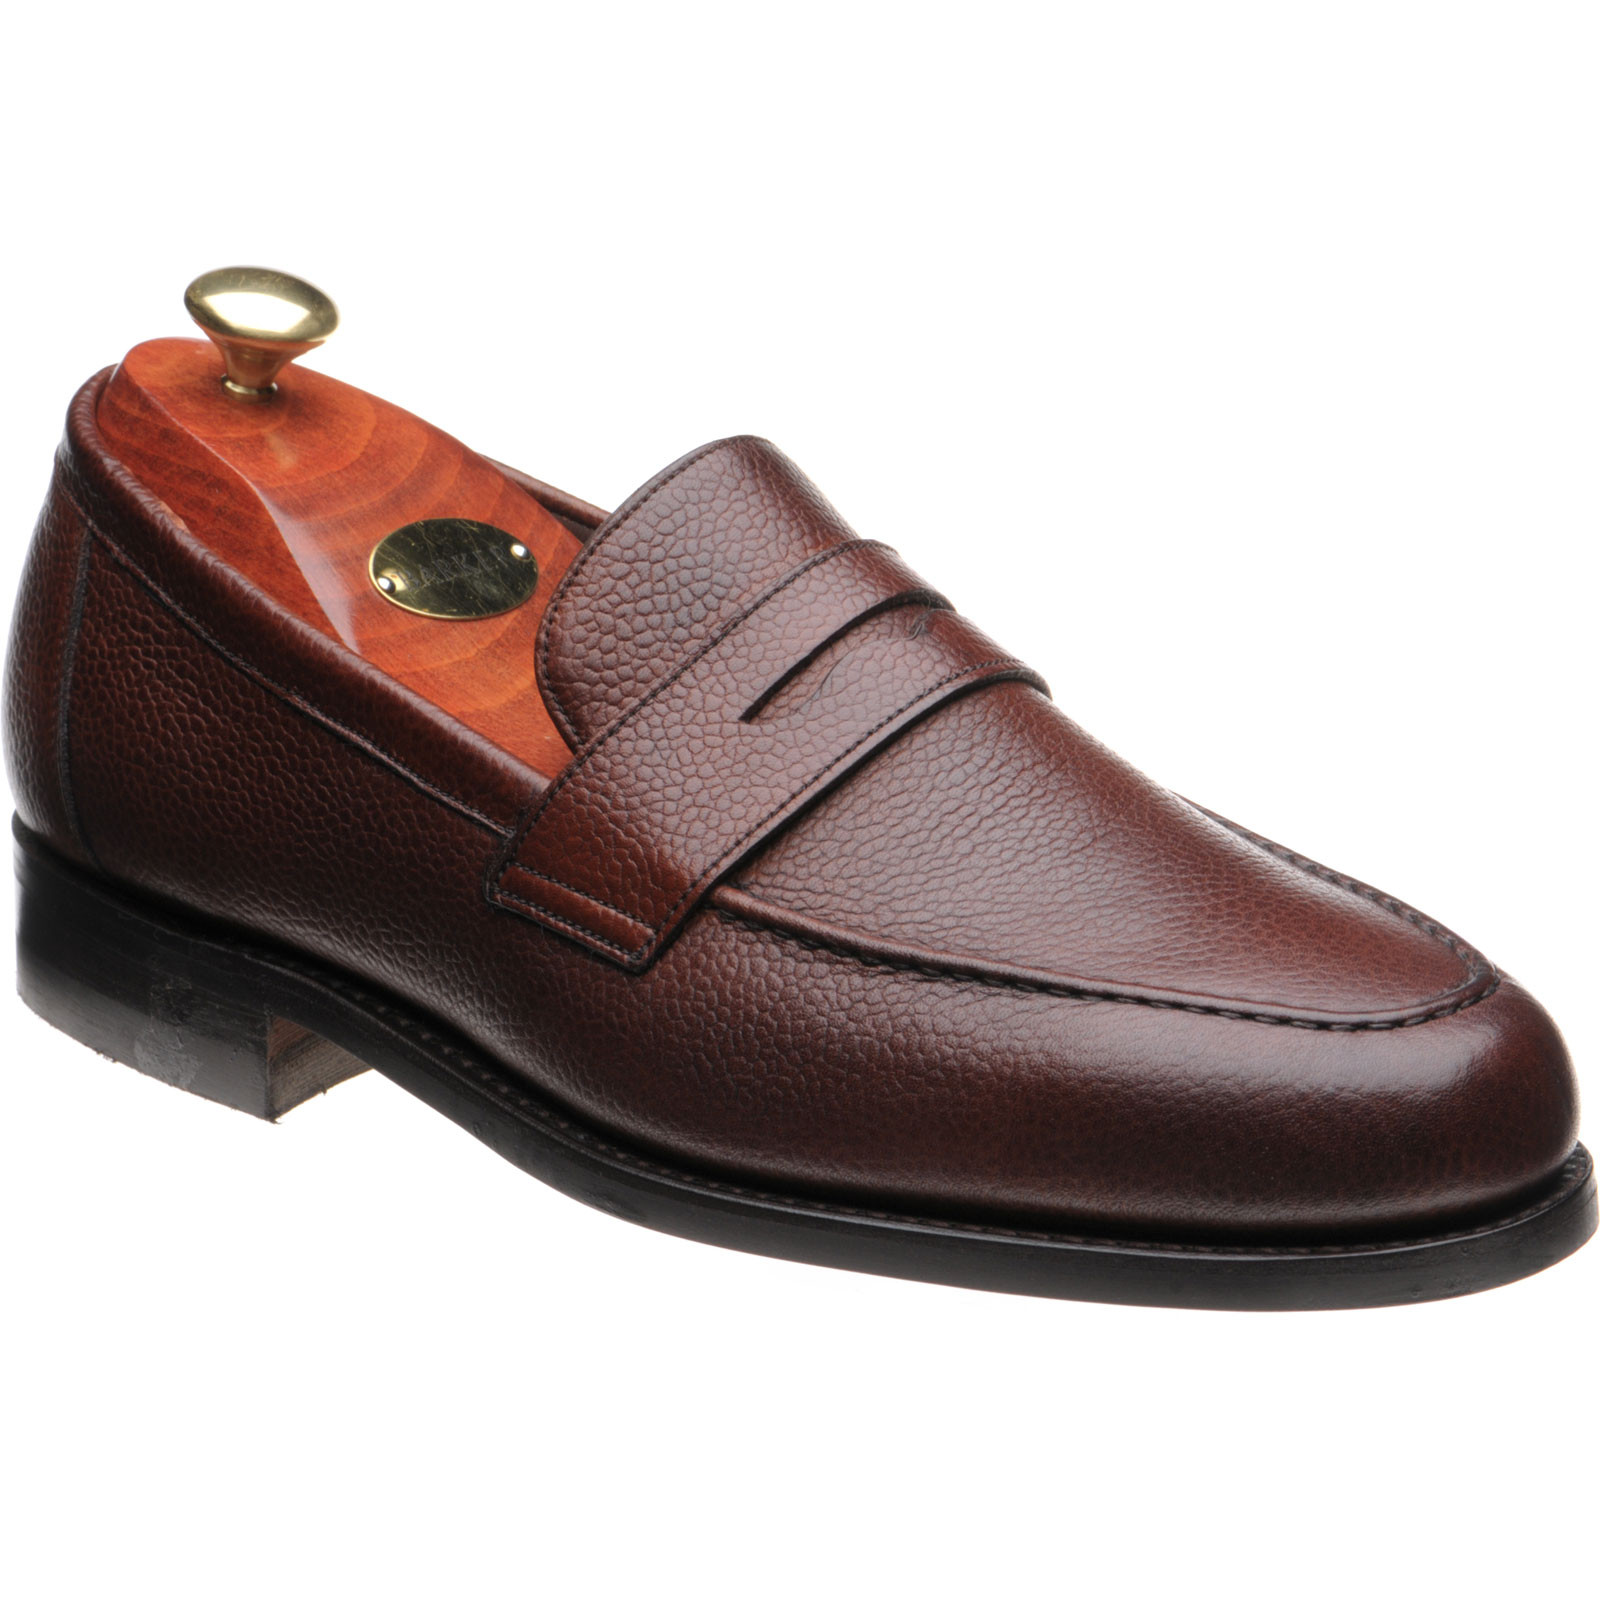 Barker shoes | Barker Handcrafted | Jevington (Rubber) in Cherry Grain ...